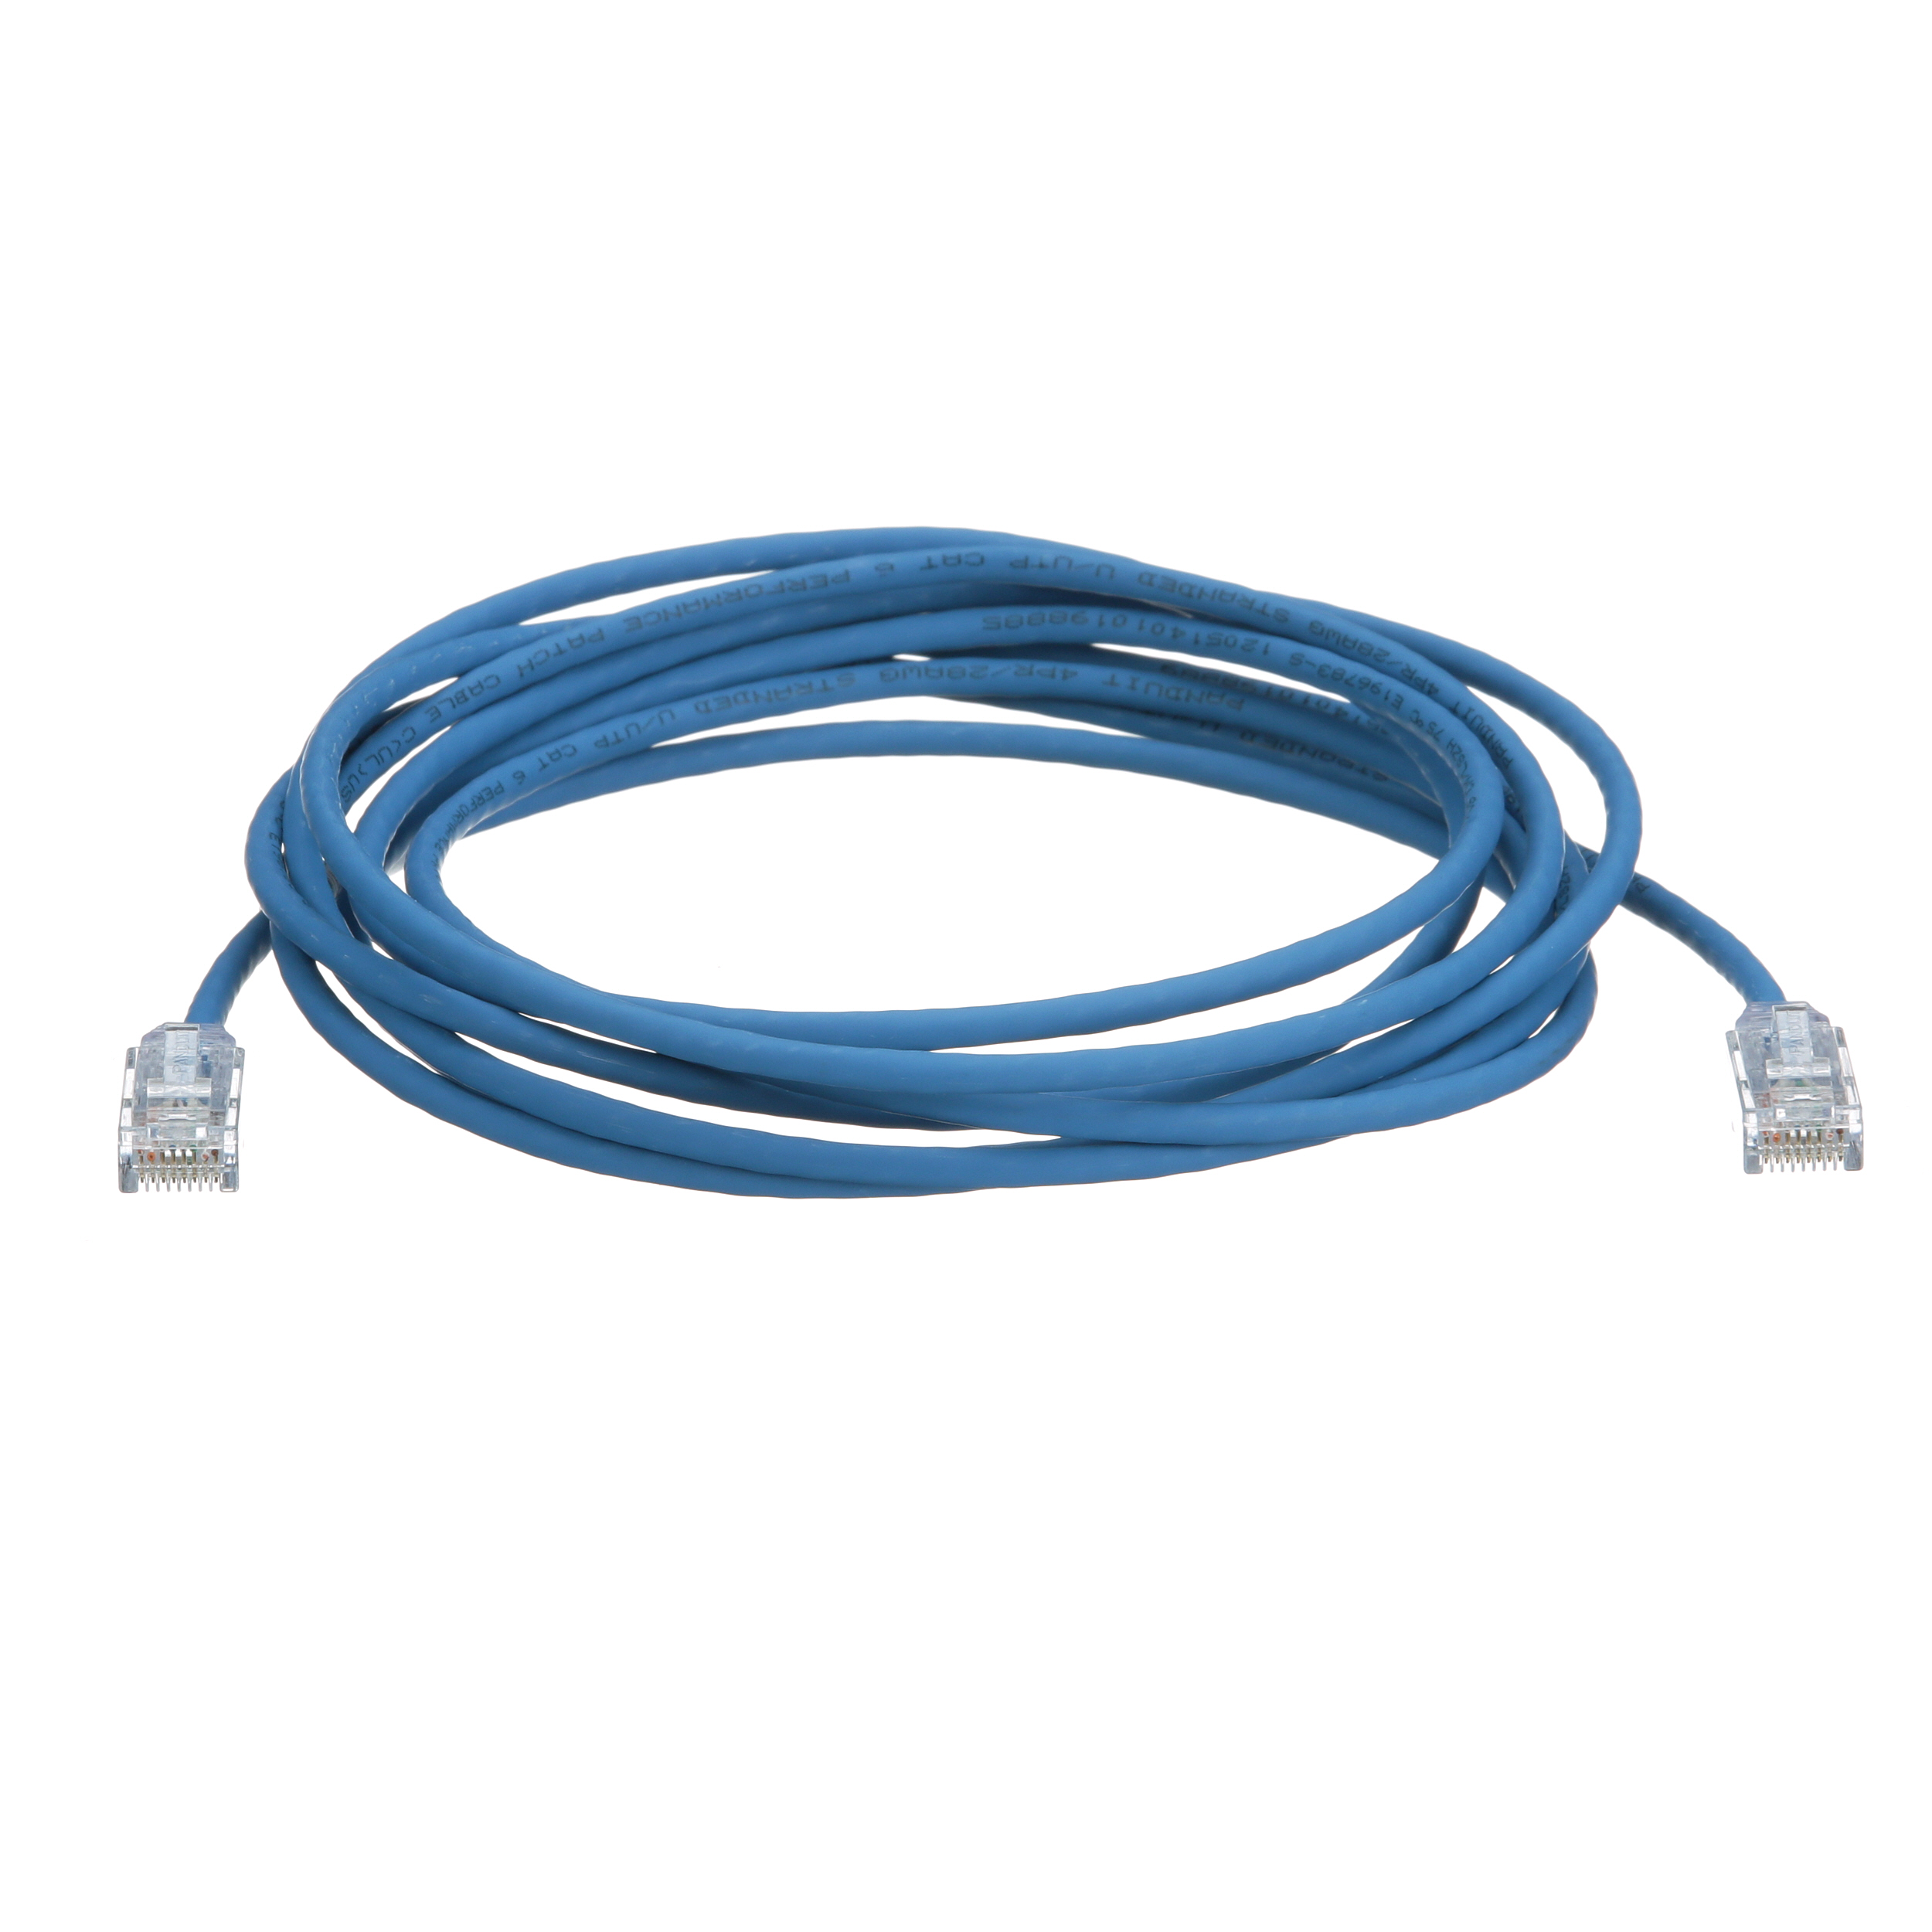 Panduit blue patch cord